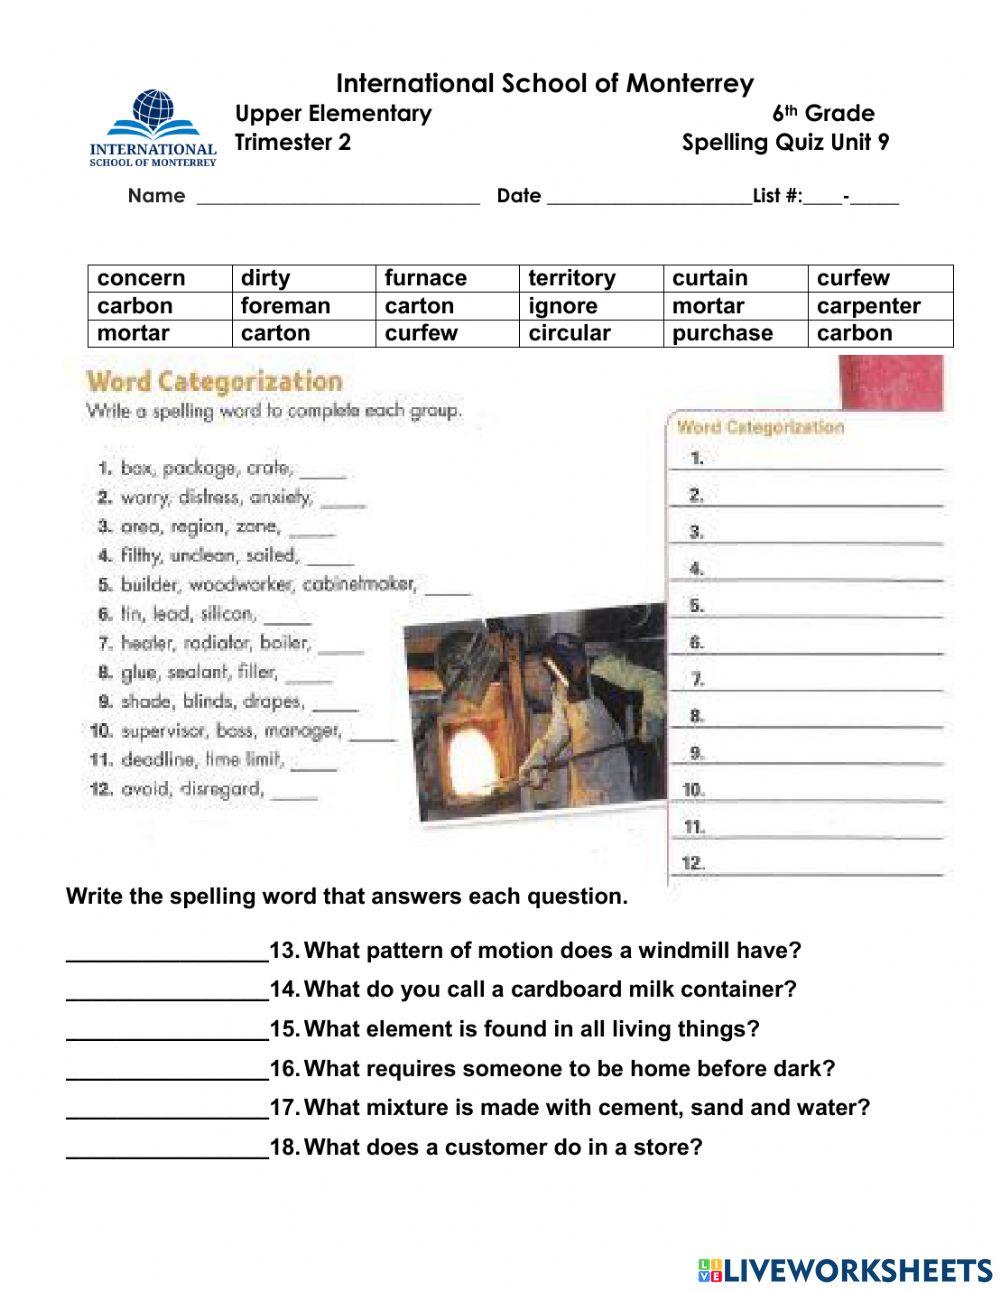 Spelling U9 long quiz